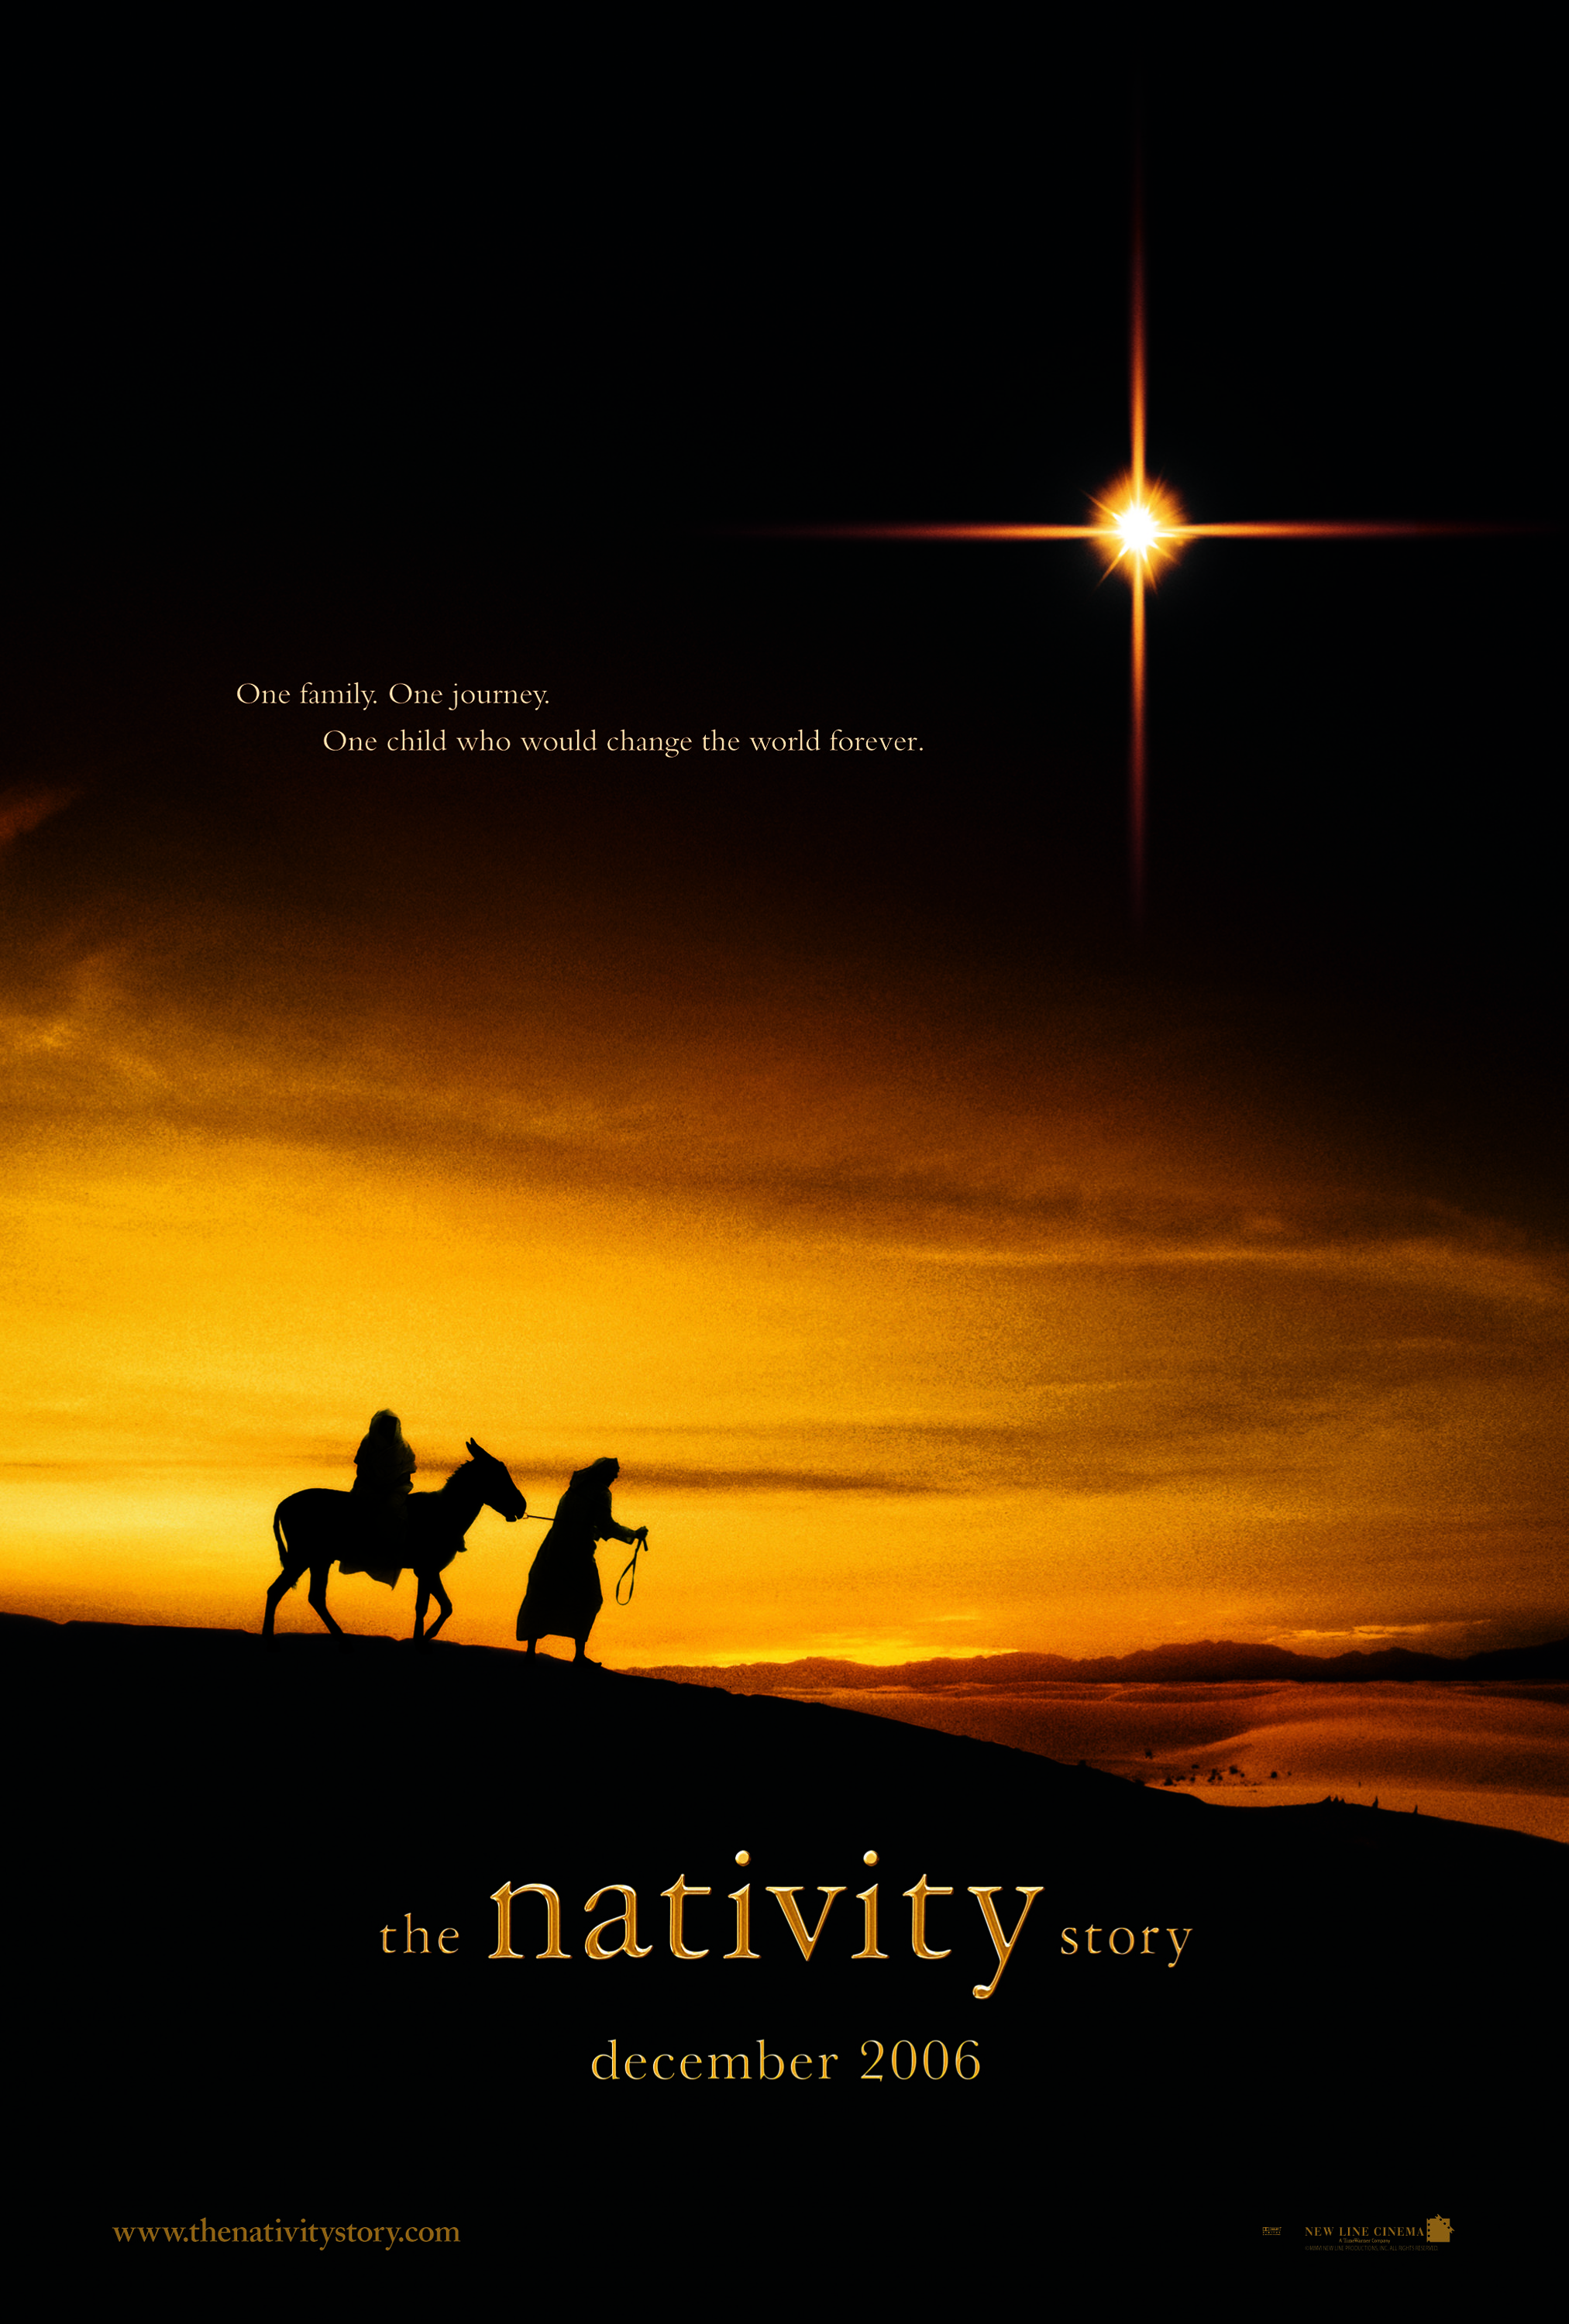 The Nativity Story Photo Gallery